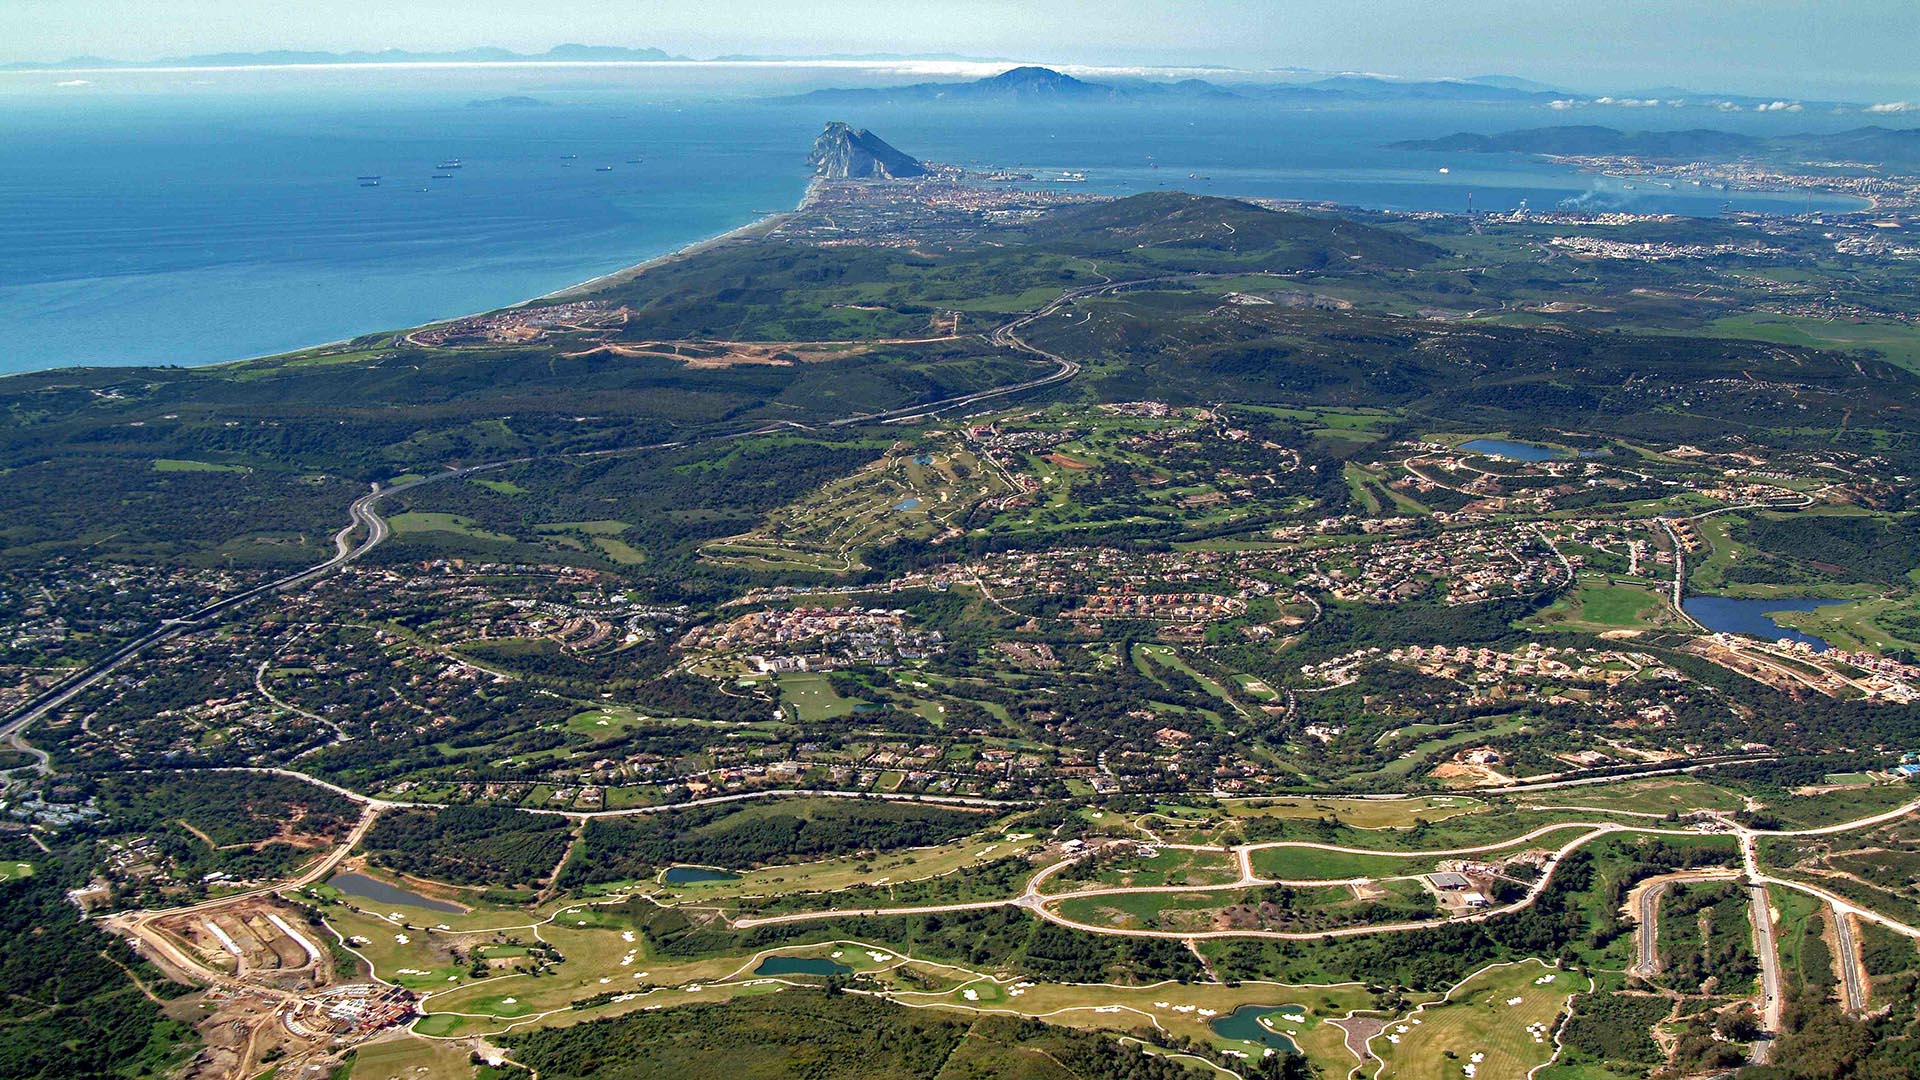 Drone view of Sotogrande, Gibraltar and Cadiz. Affordable development in Sotogrande